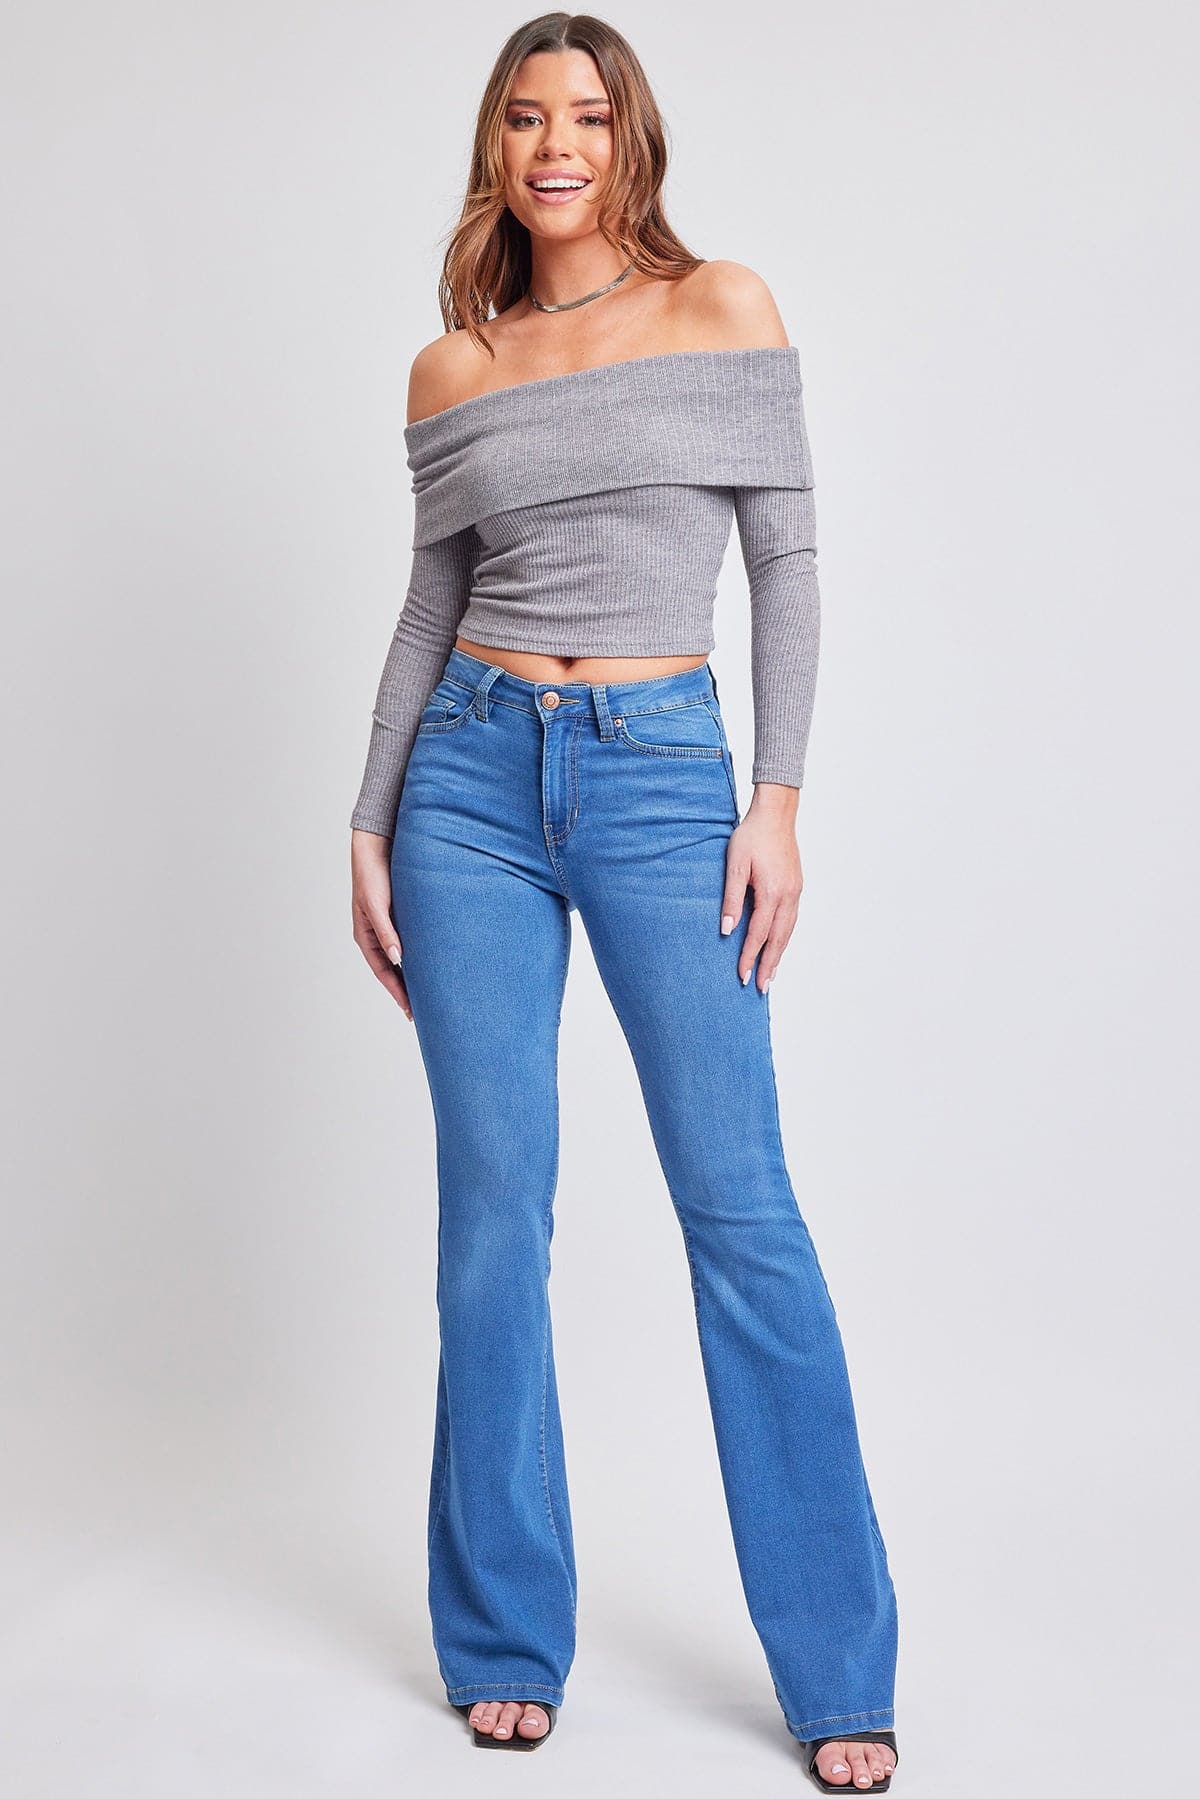 YMI Jeans Women's Plus Size Hyper Denim Super Stretchy Flare Jean 